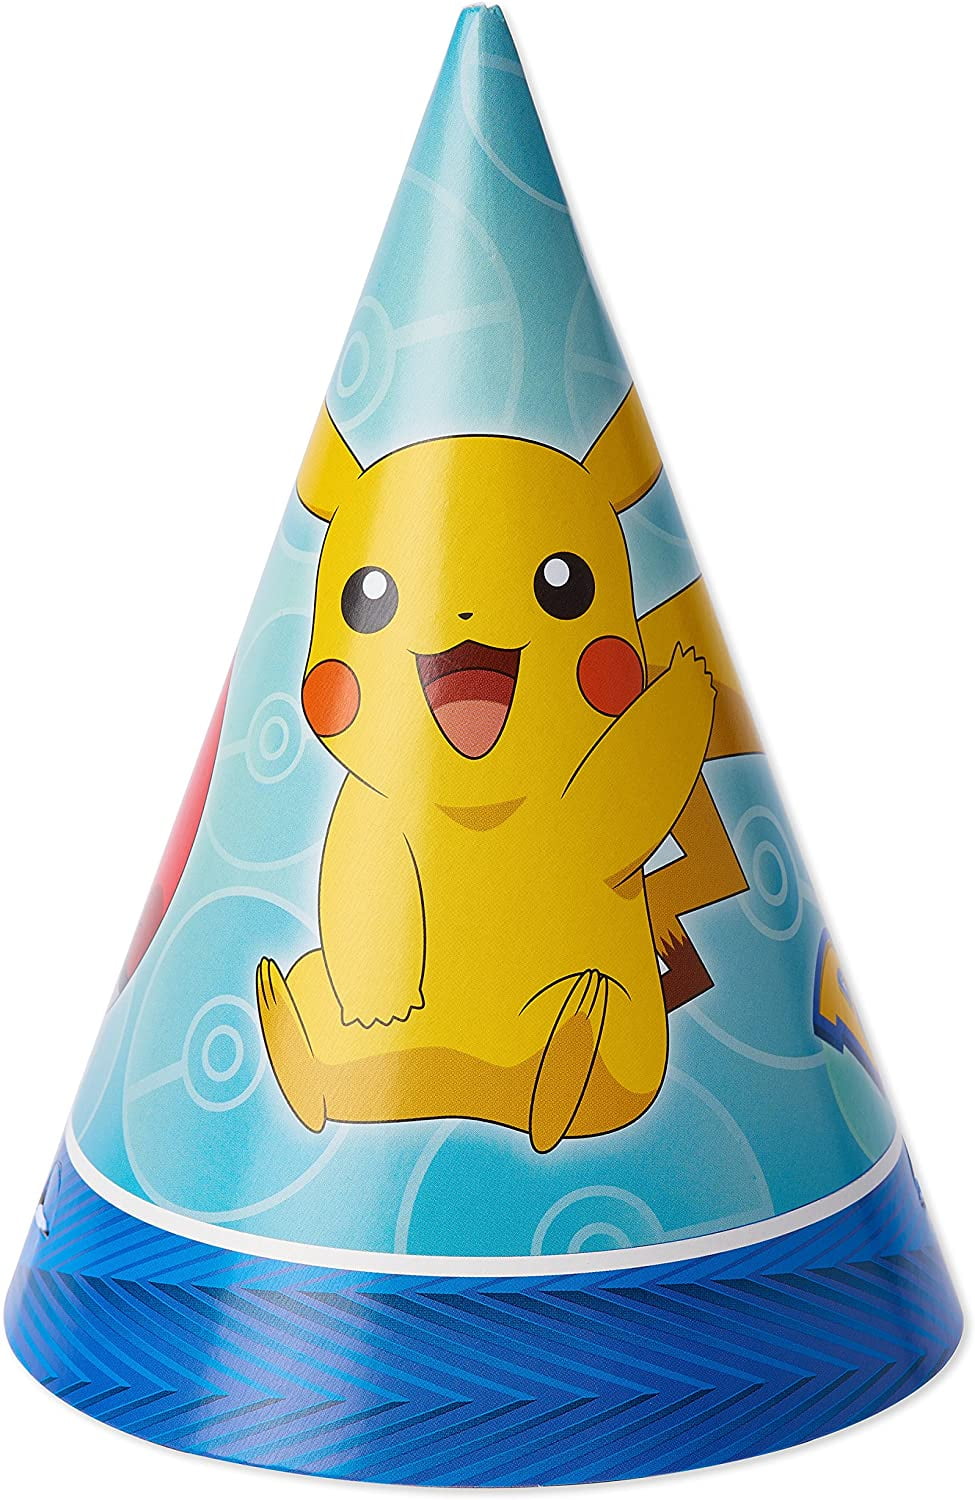 Pokemon Paper Cone Hats, Party Favor